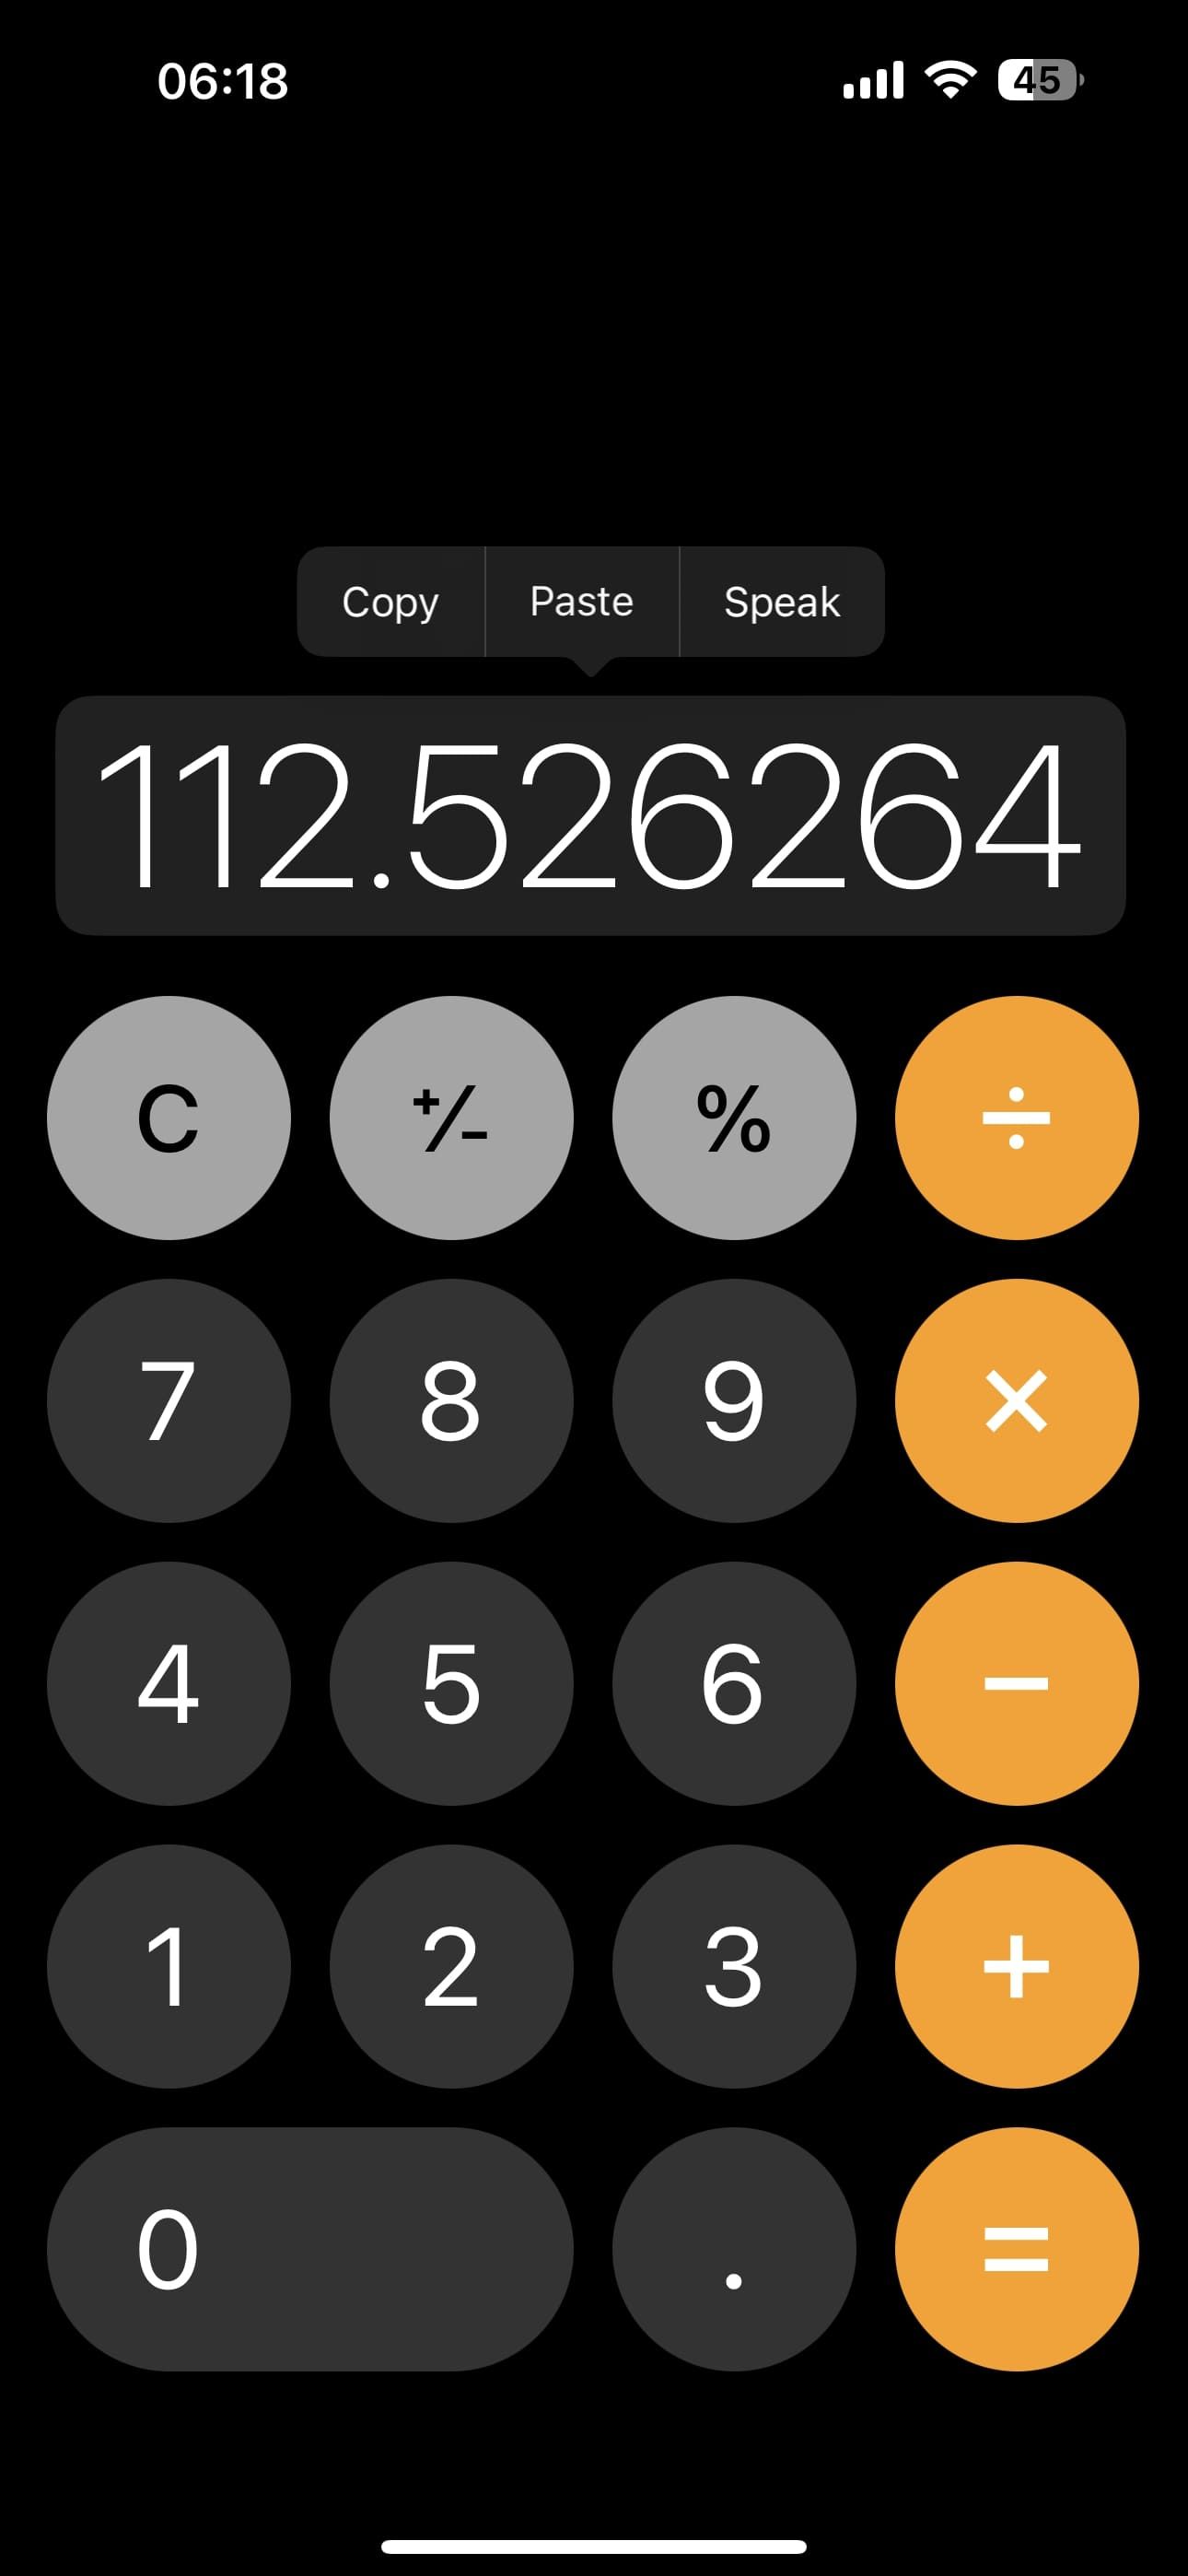 Speak Results iPhone Calculator App